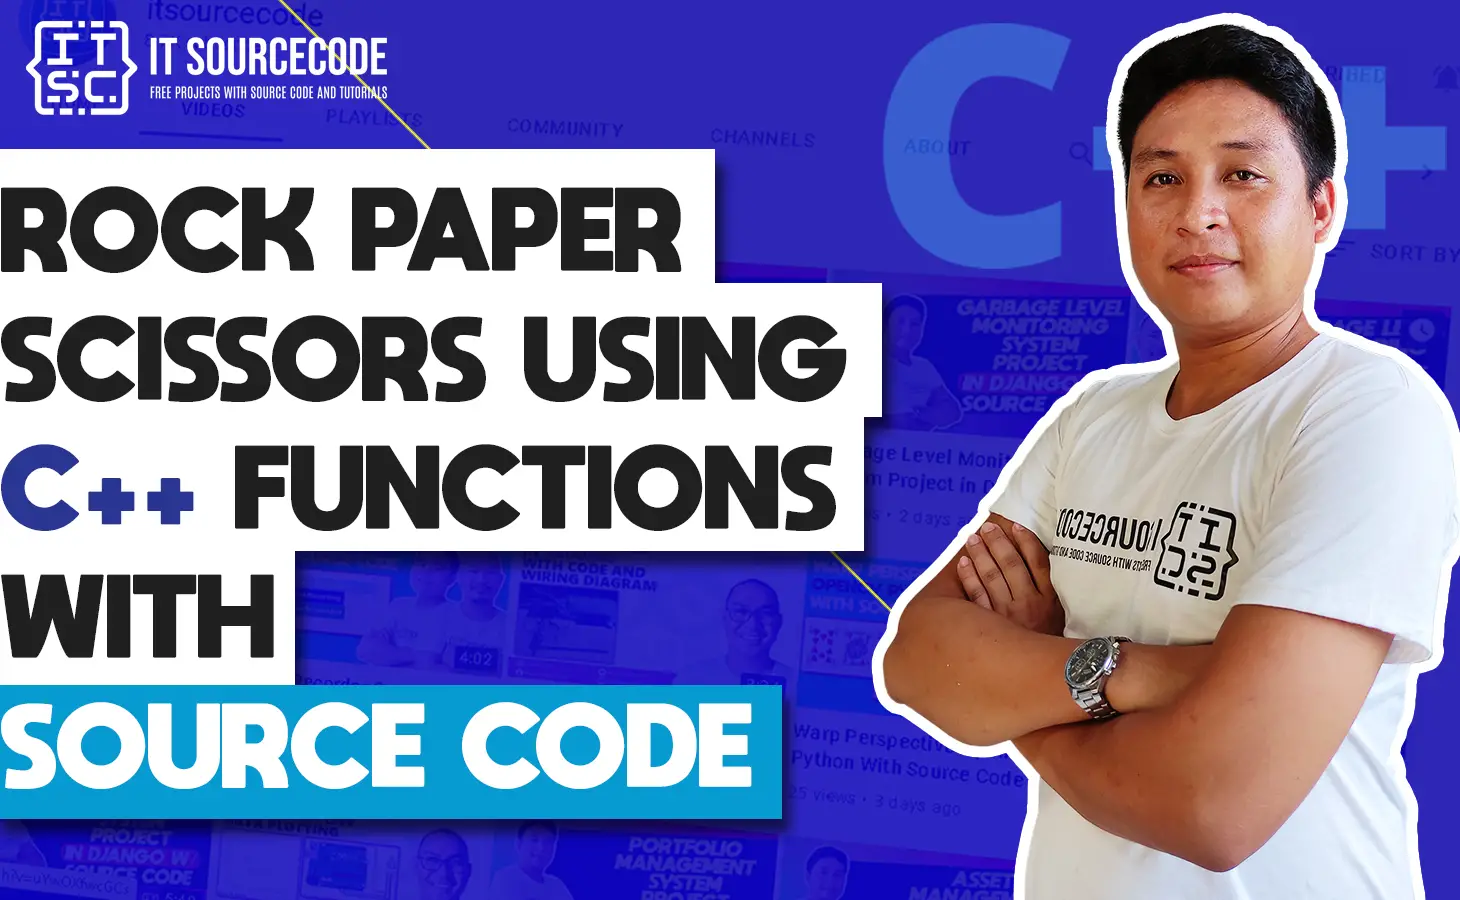 Rock Paper Scissors using C++ Functions With Source Code